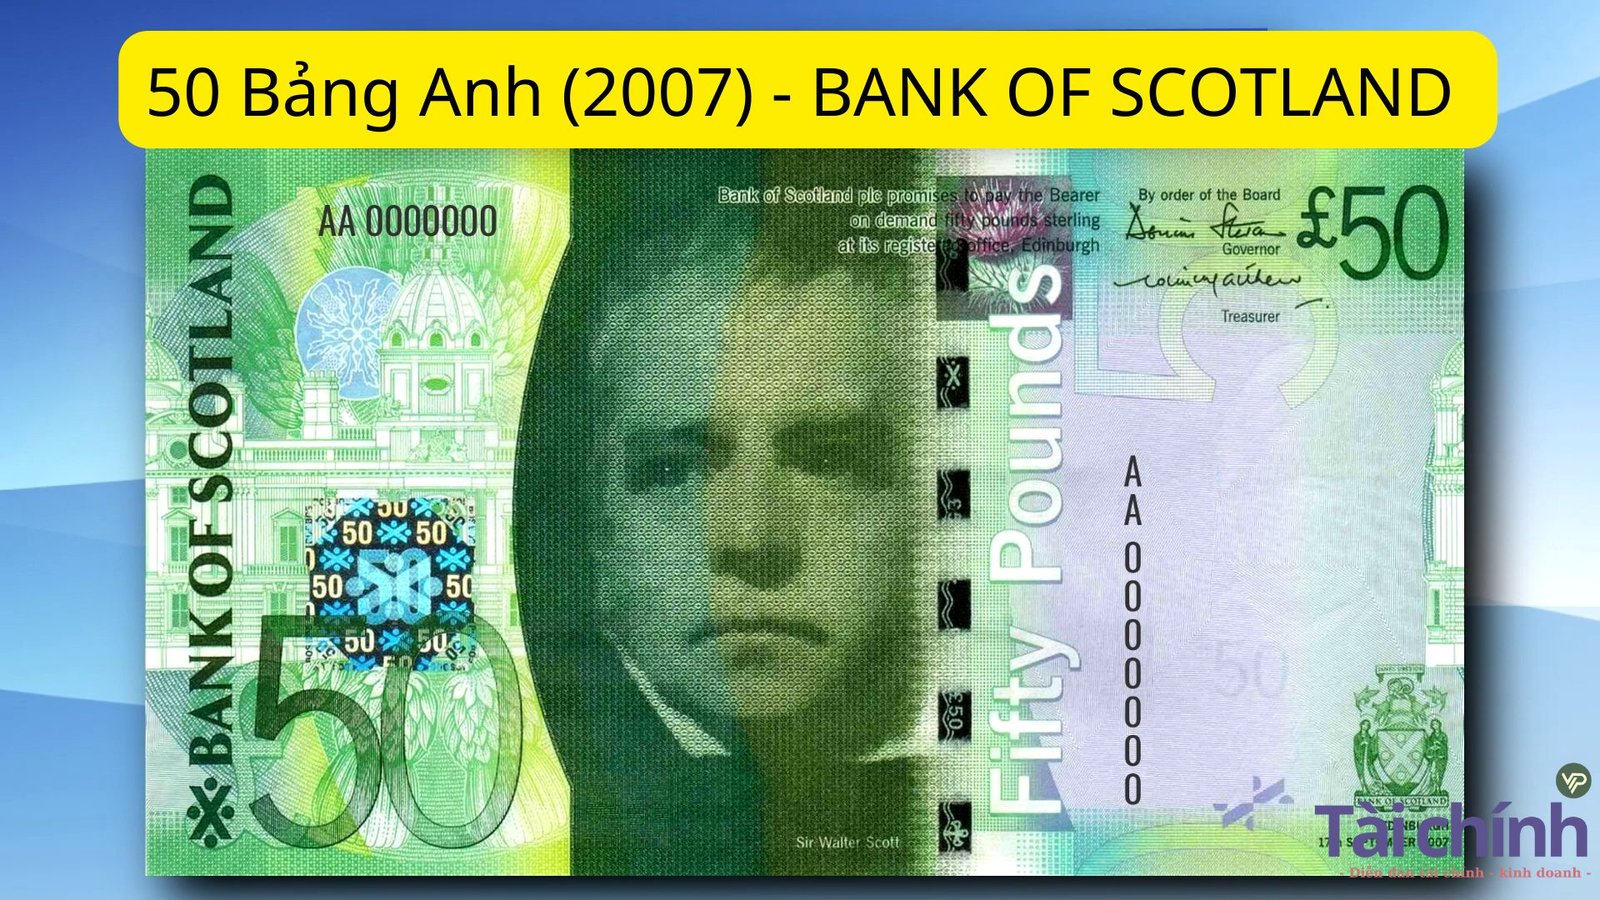 50 Bảng Anh (2007) - BANK OF SCOTLAND